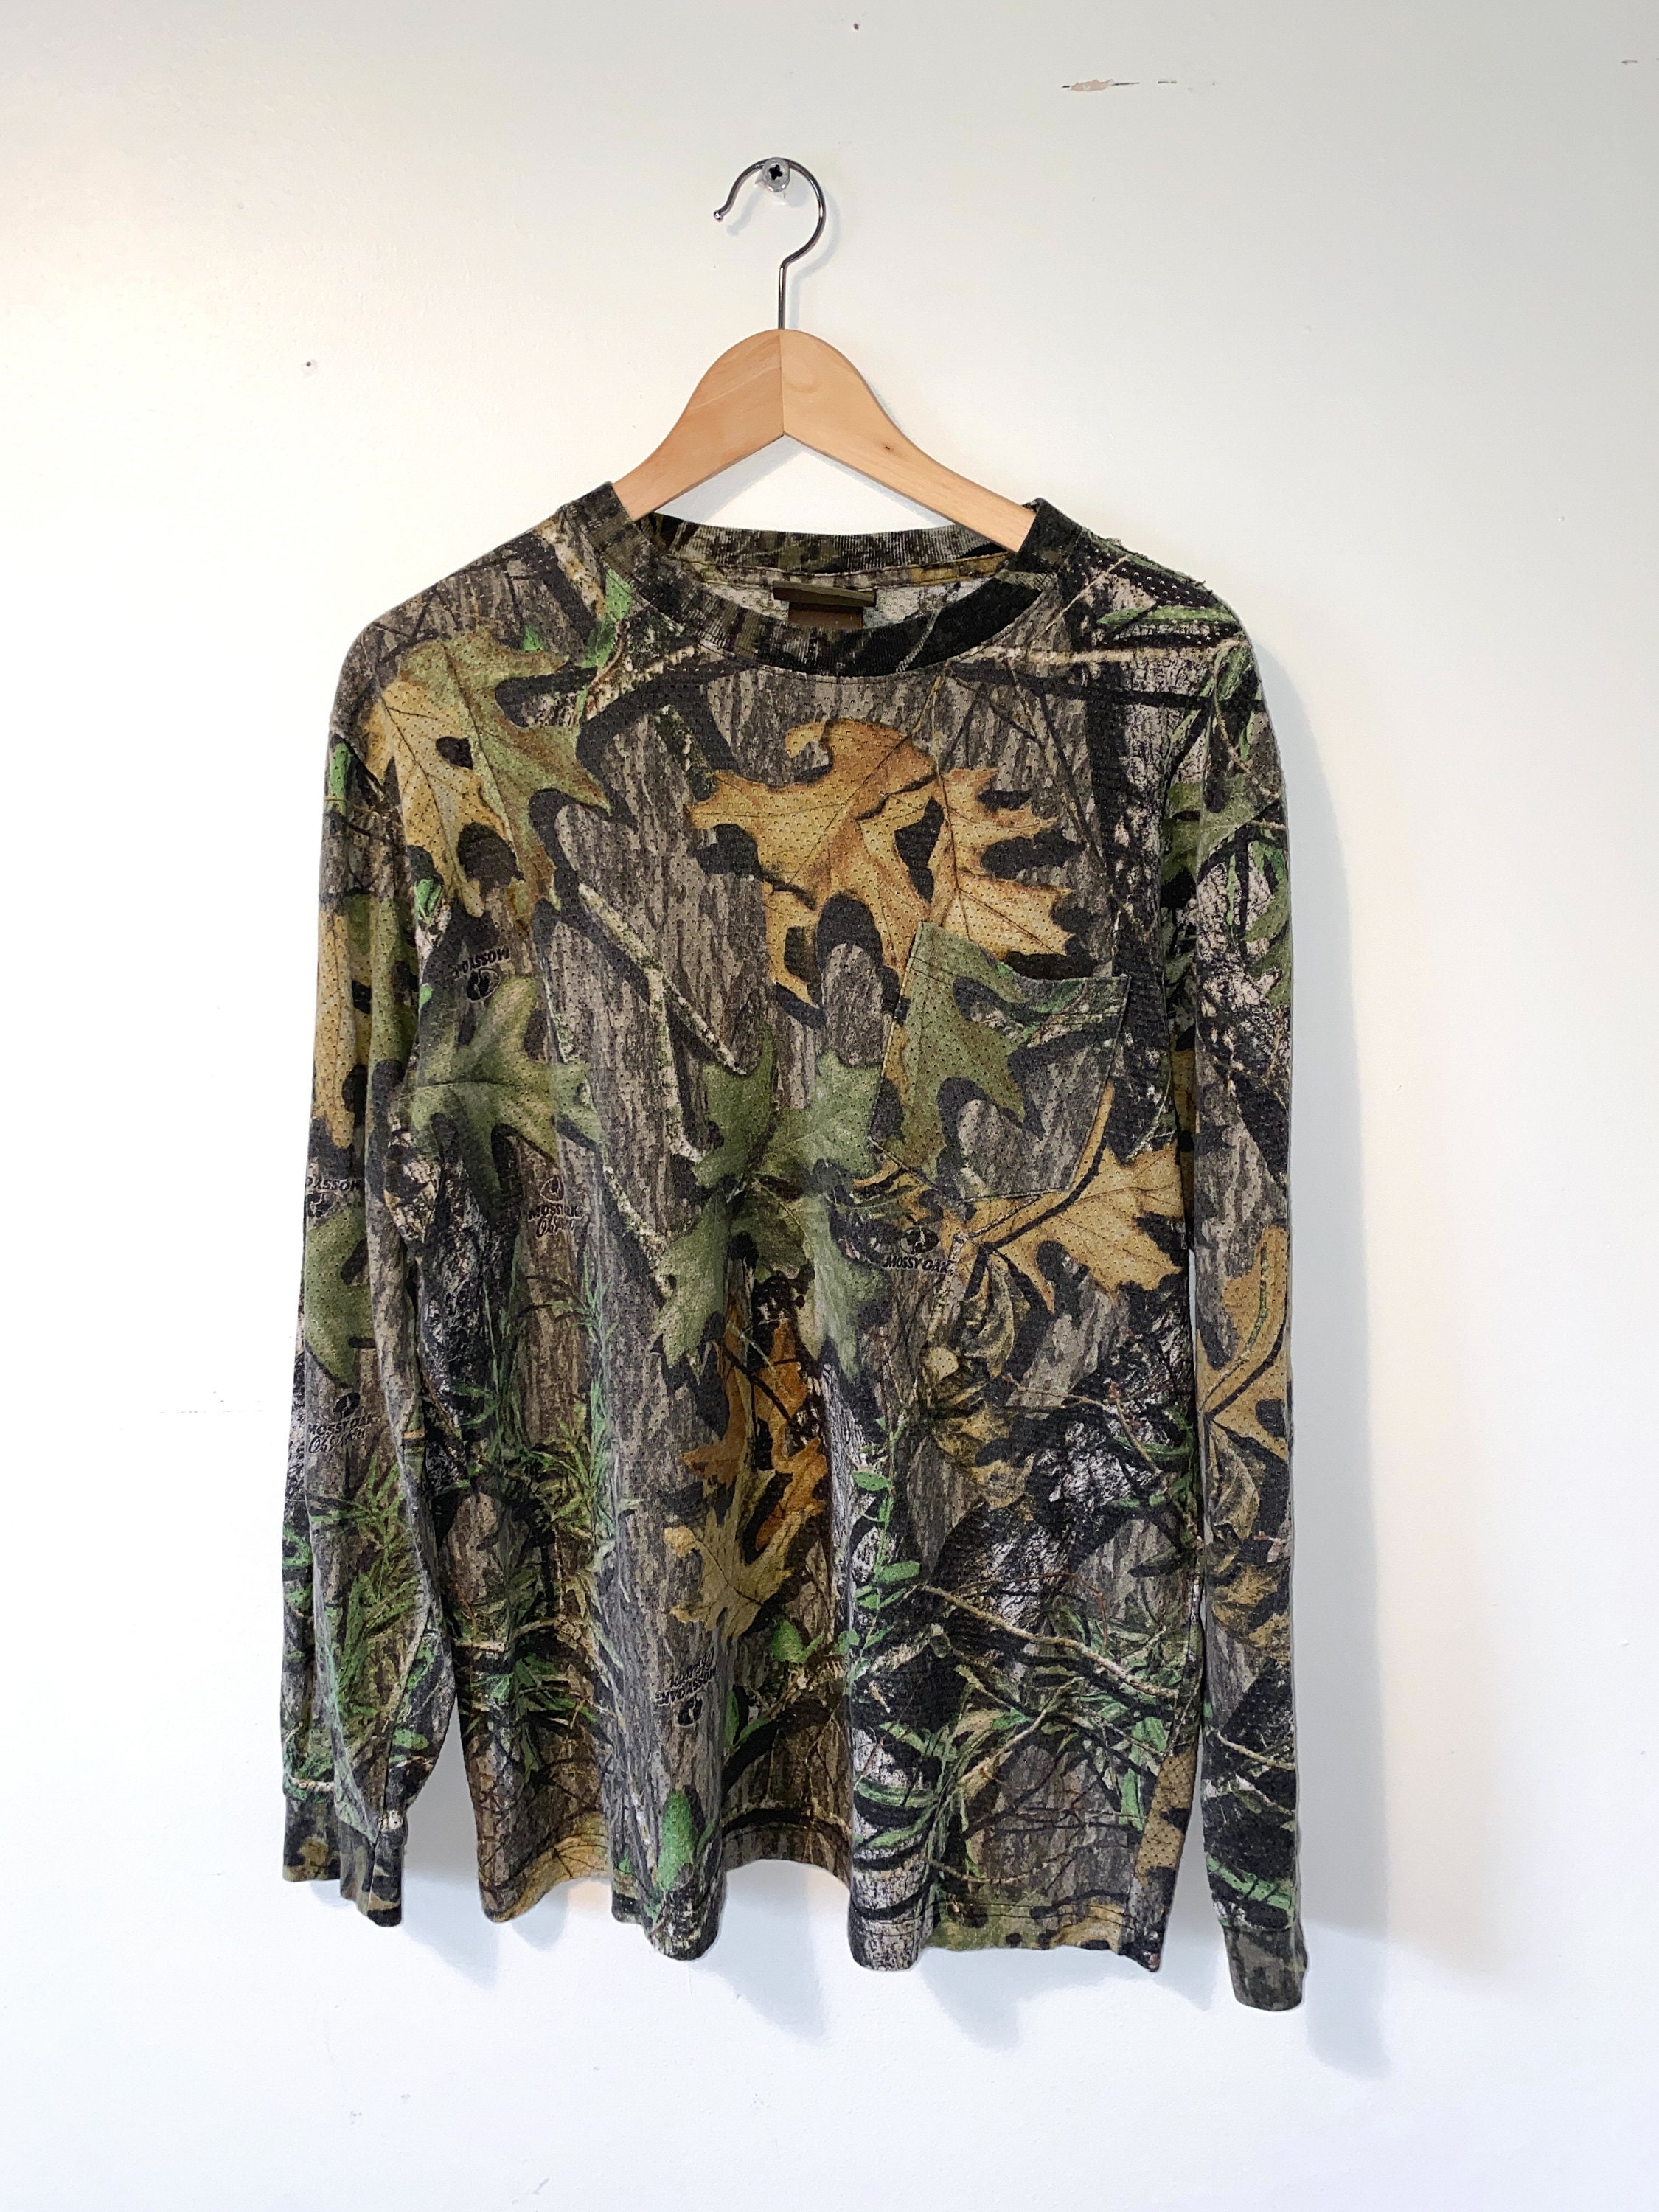 Tshirt 1781B- Cotton100% Jersey- Short Sleeve/ Vine Rope Print- Moss Green